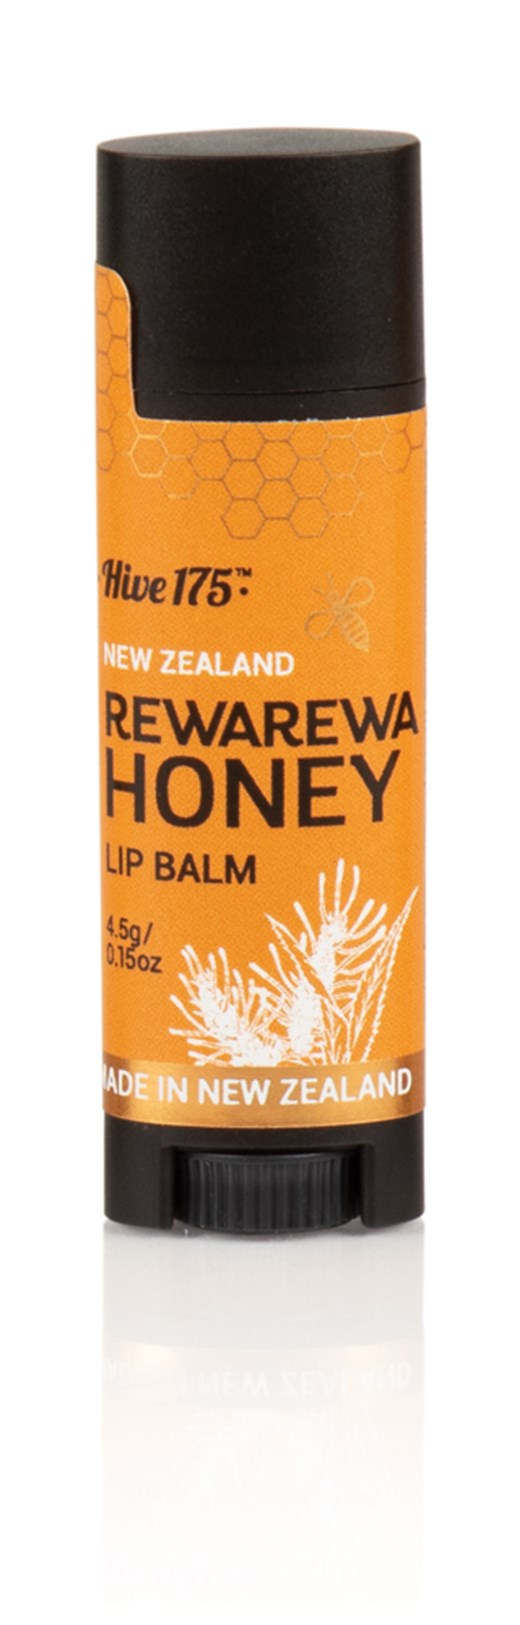 NZ Honey Lip Balms